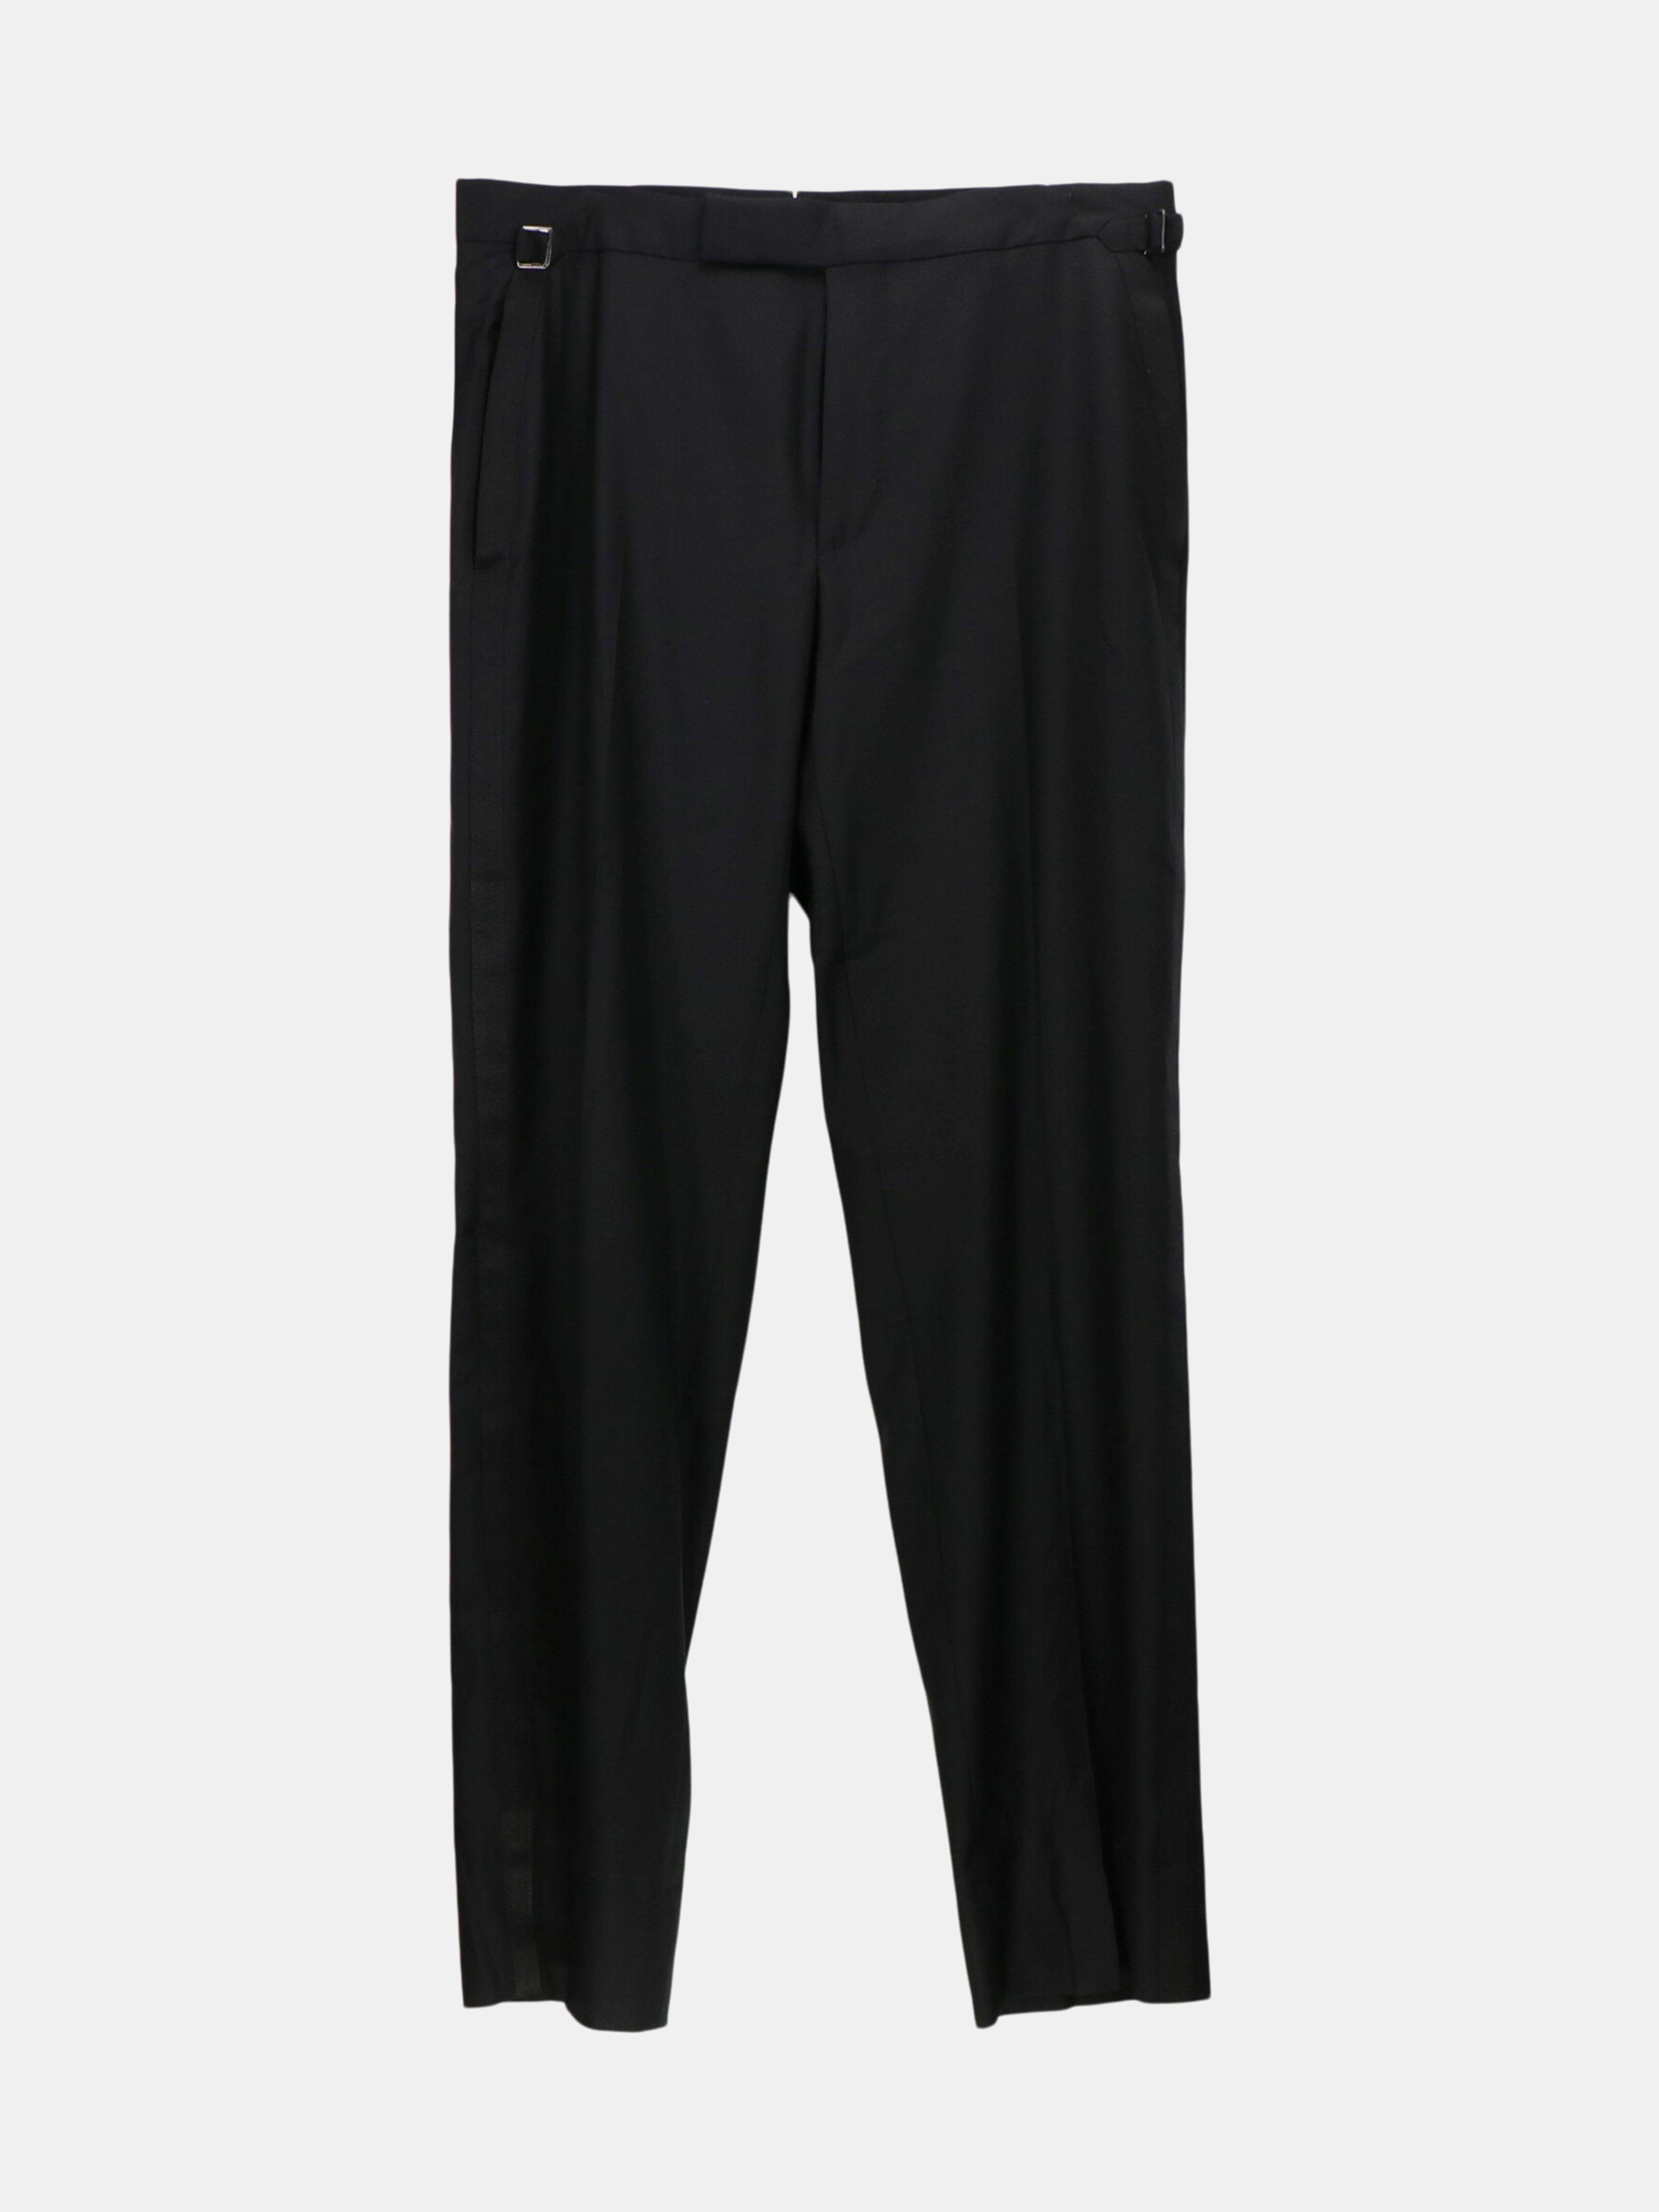 Tom Ford Men\'s Black Wool Dress Pant - 34 Inches - 34 | Verishop